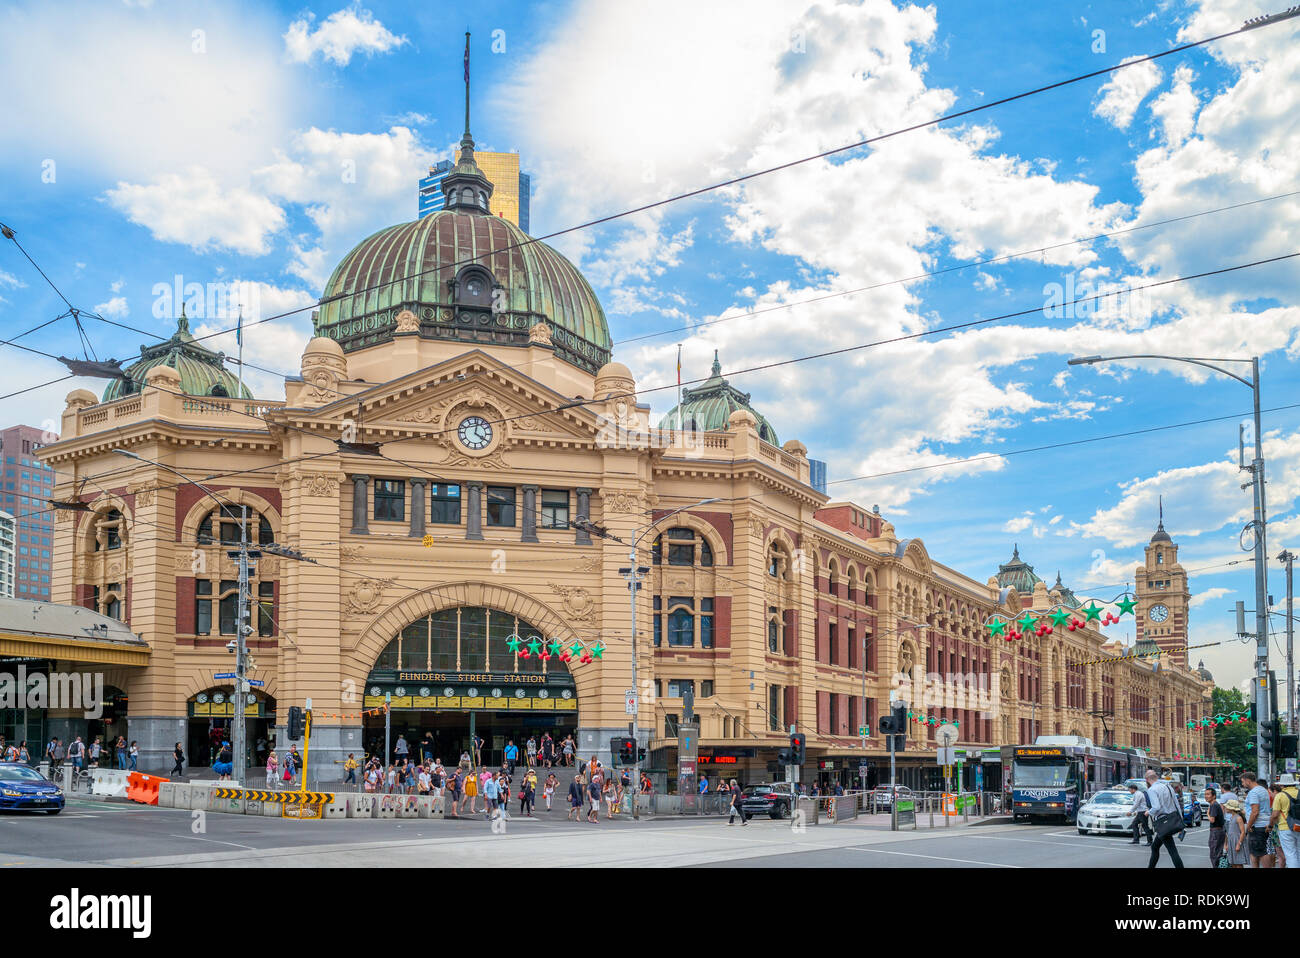 Melbourne, Australien - 29 Dezember, 2019: Bahnhof Flinders Street in Melbourne, dient das gesamte Stadtgebiet Schienennetz Stockfoto